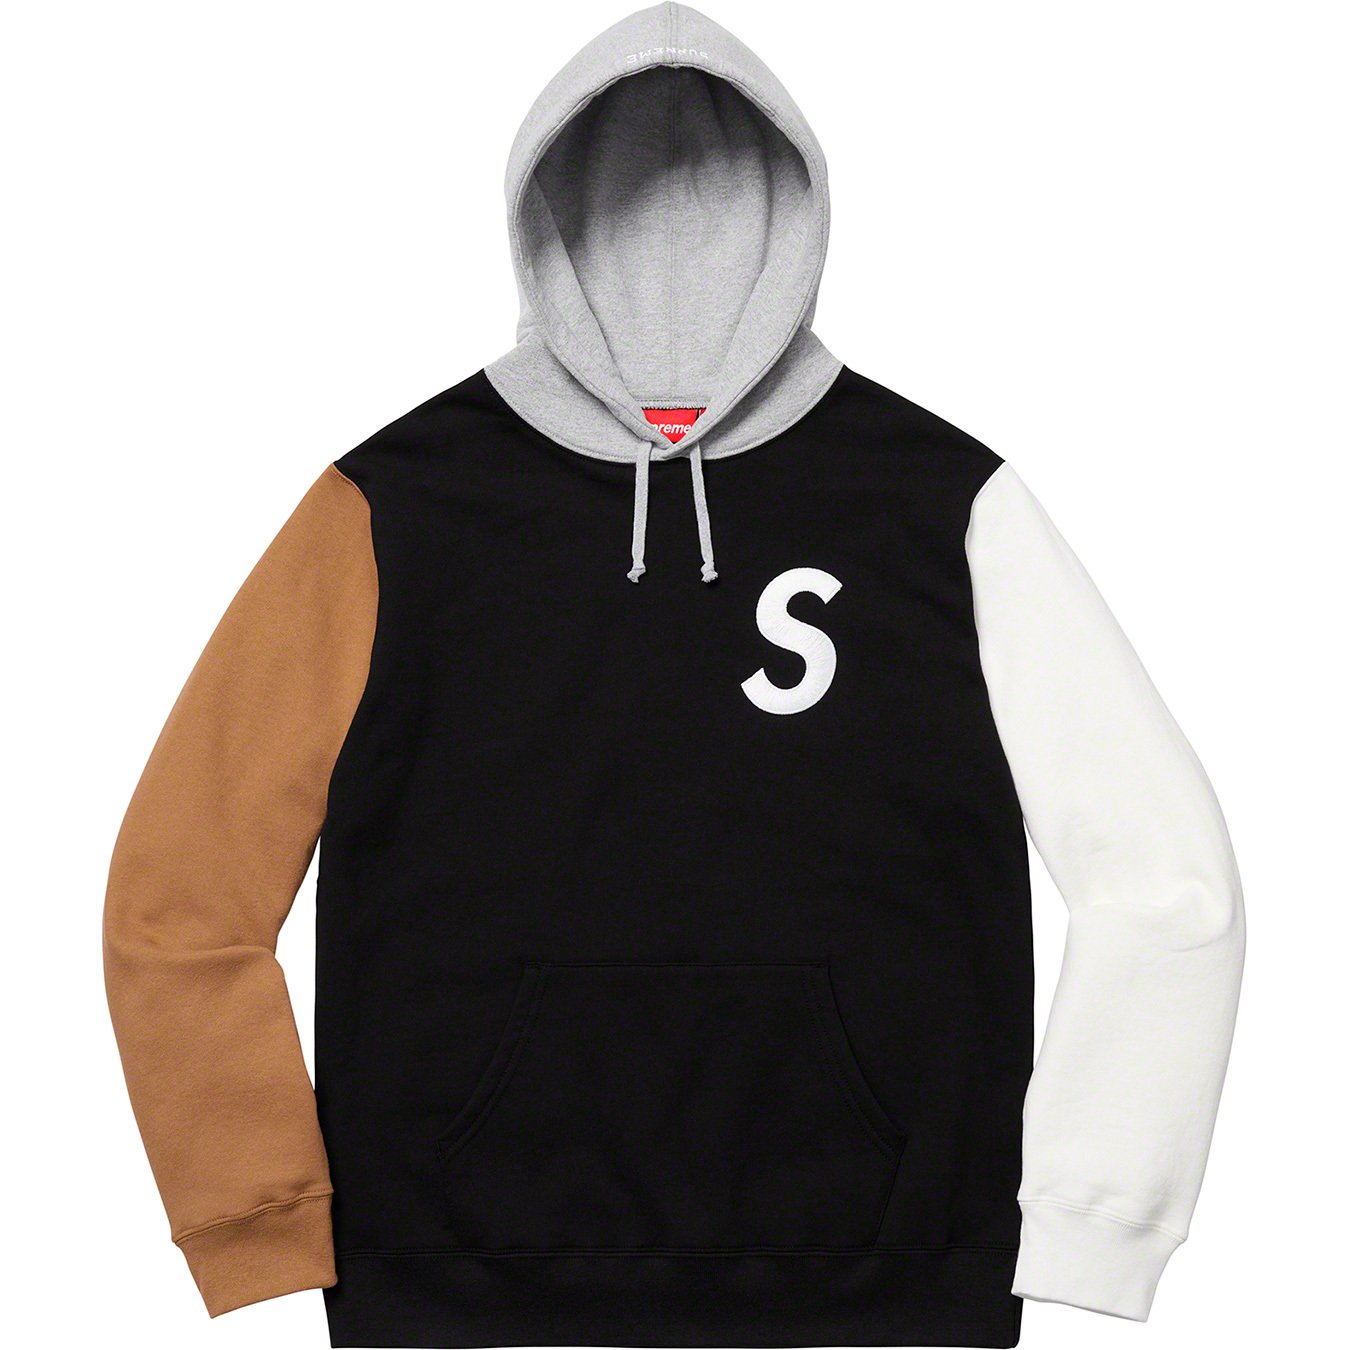 S Logo Colorblocked Hooded Sweatshirt - spring summer 2019 - Supreme